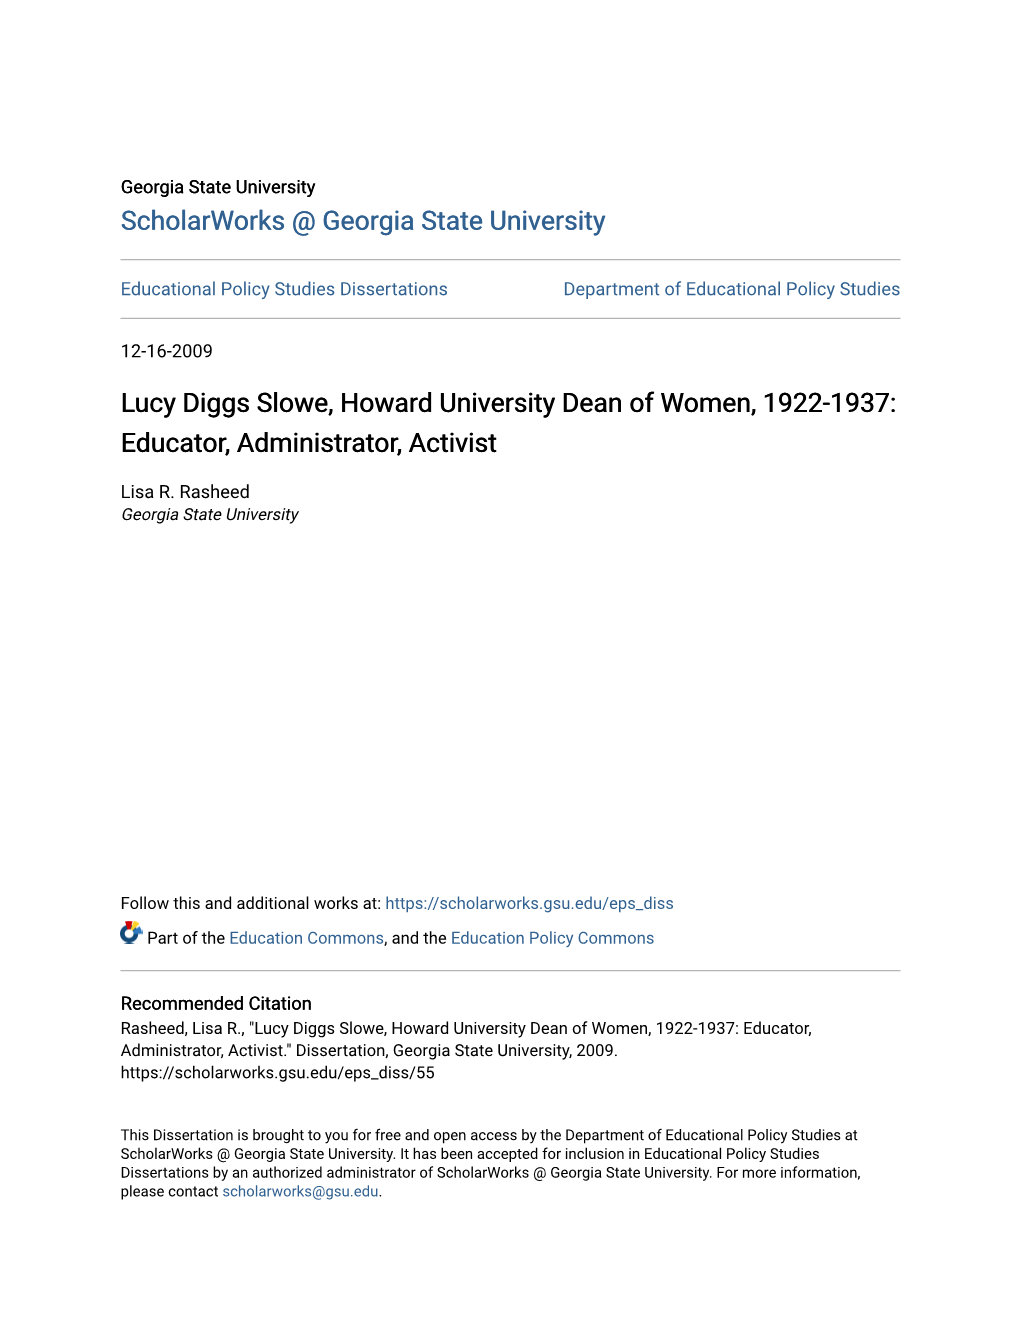 Lucy Diggs Slowe, Howard University Dean of Women, 1922-1937: Educator, Administrator, Activist